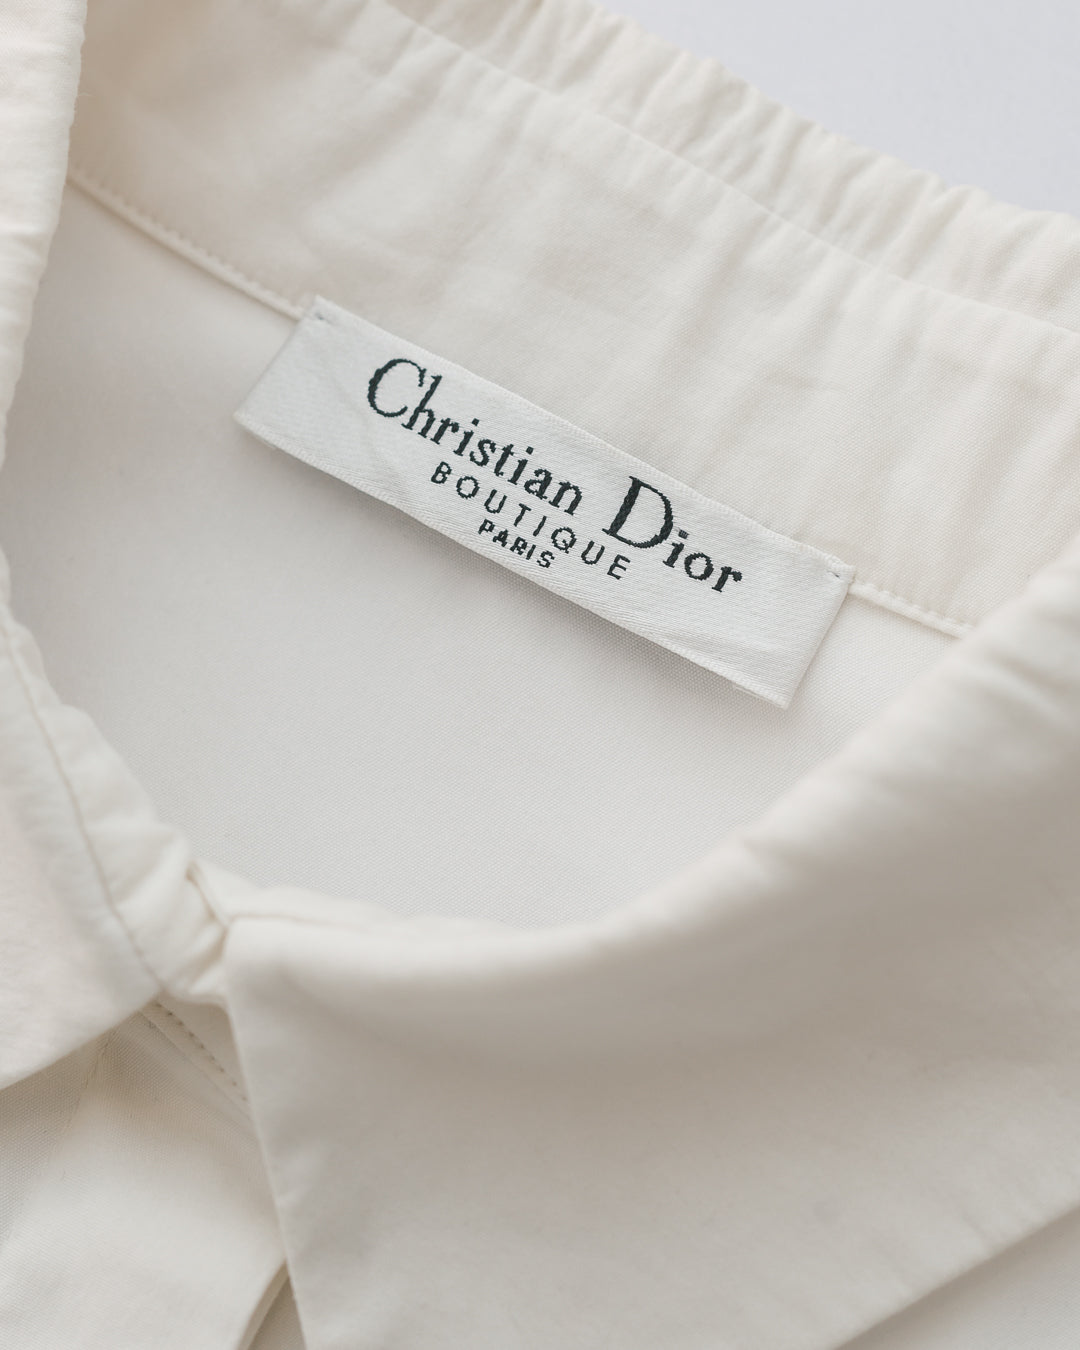 Christian Dior Boutique Button Down